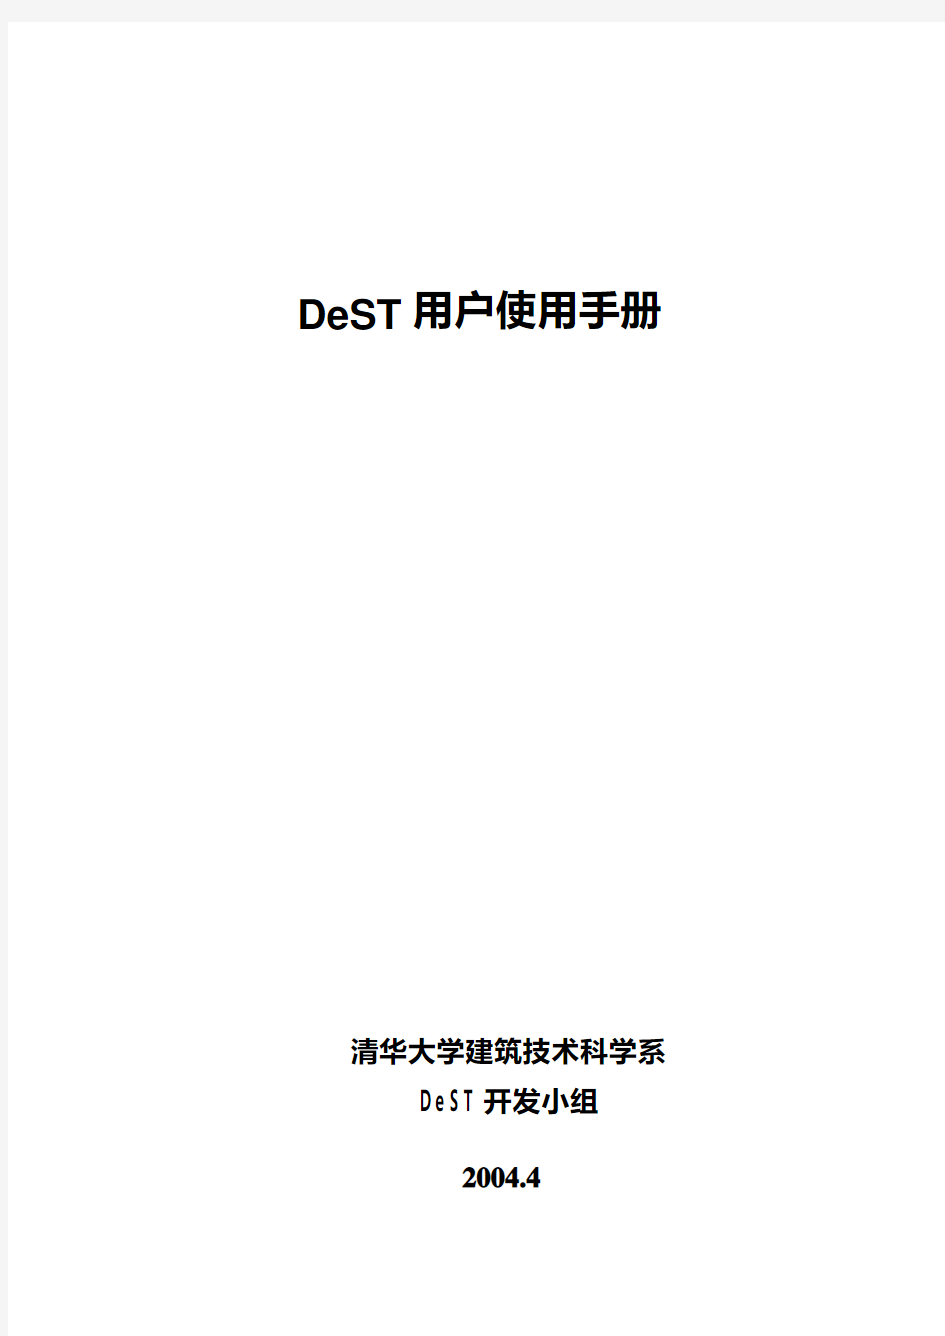 DeST软件的用户手册